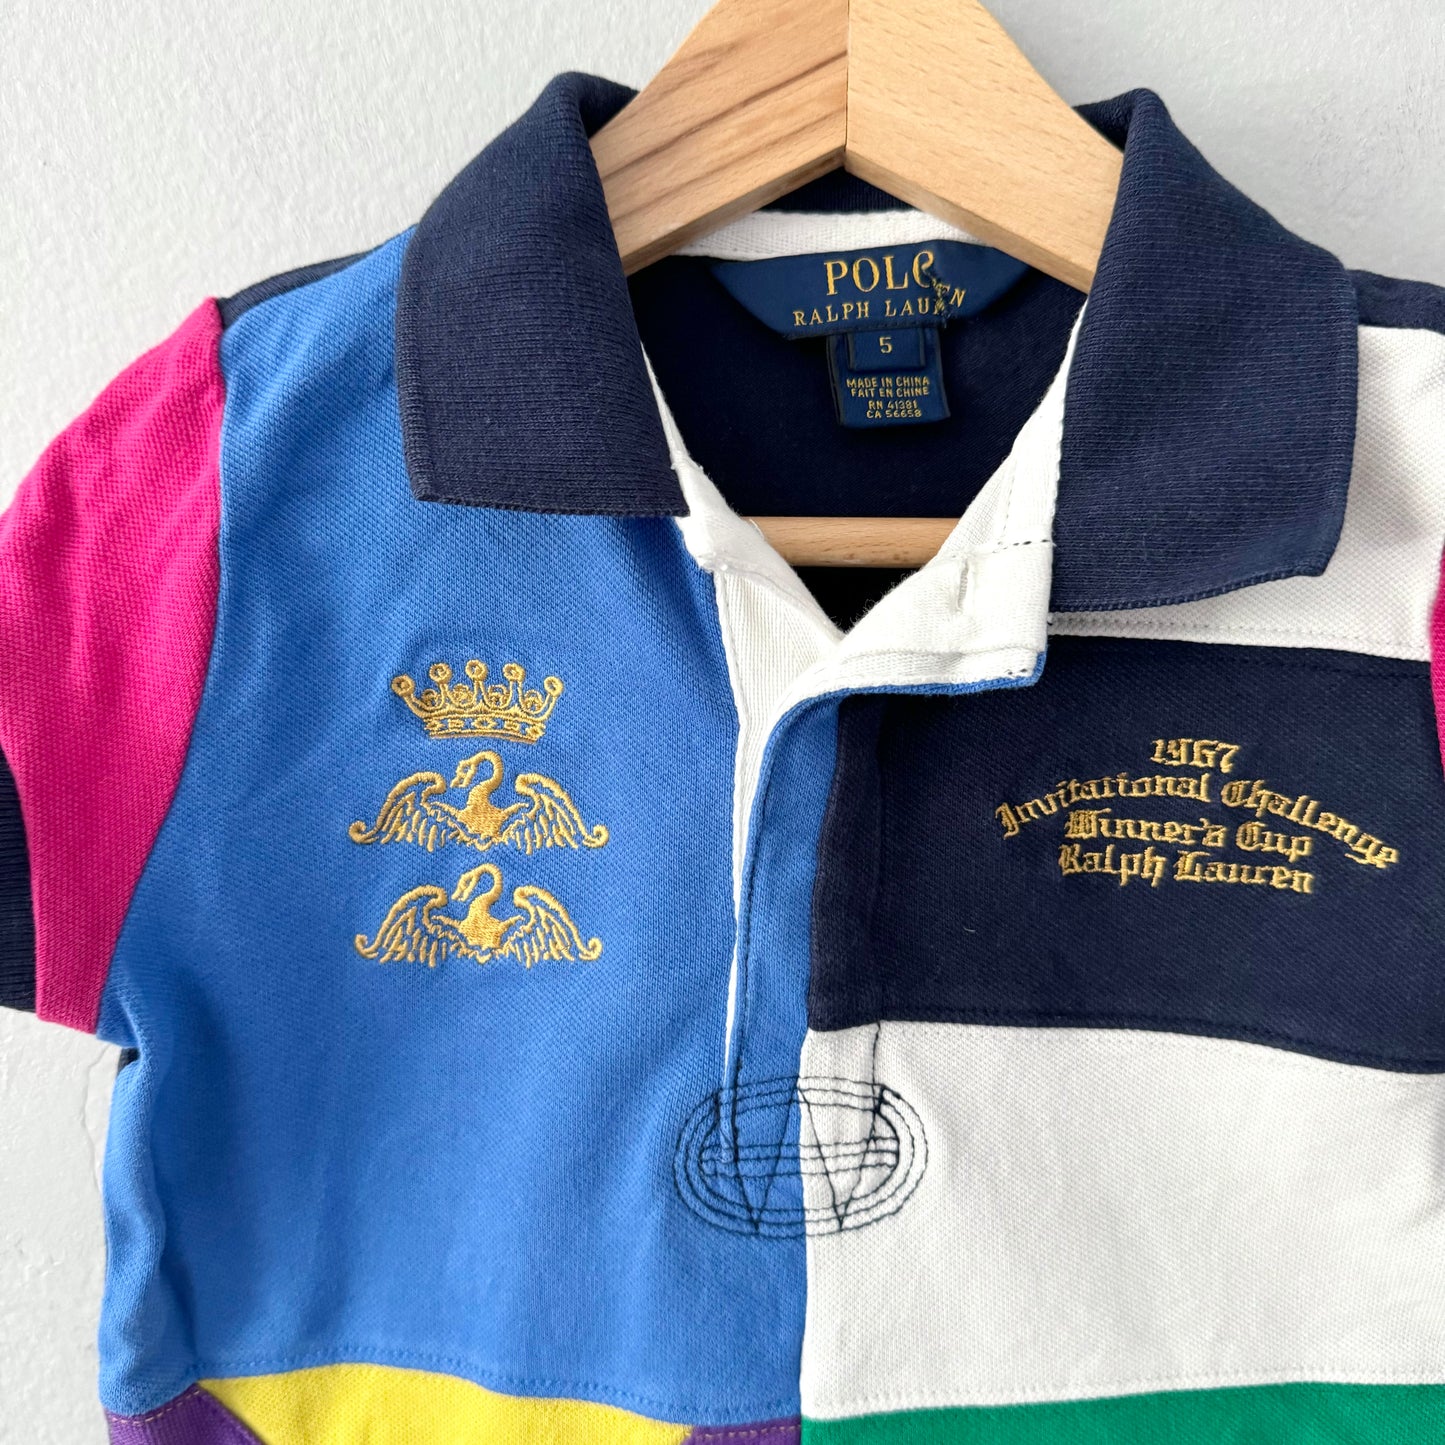 Polo Ralph Lauren / Colourful polo shirt / 5Y